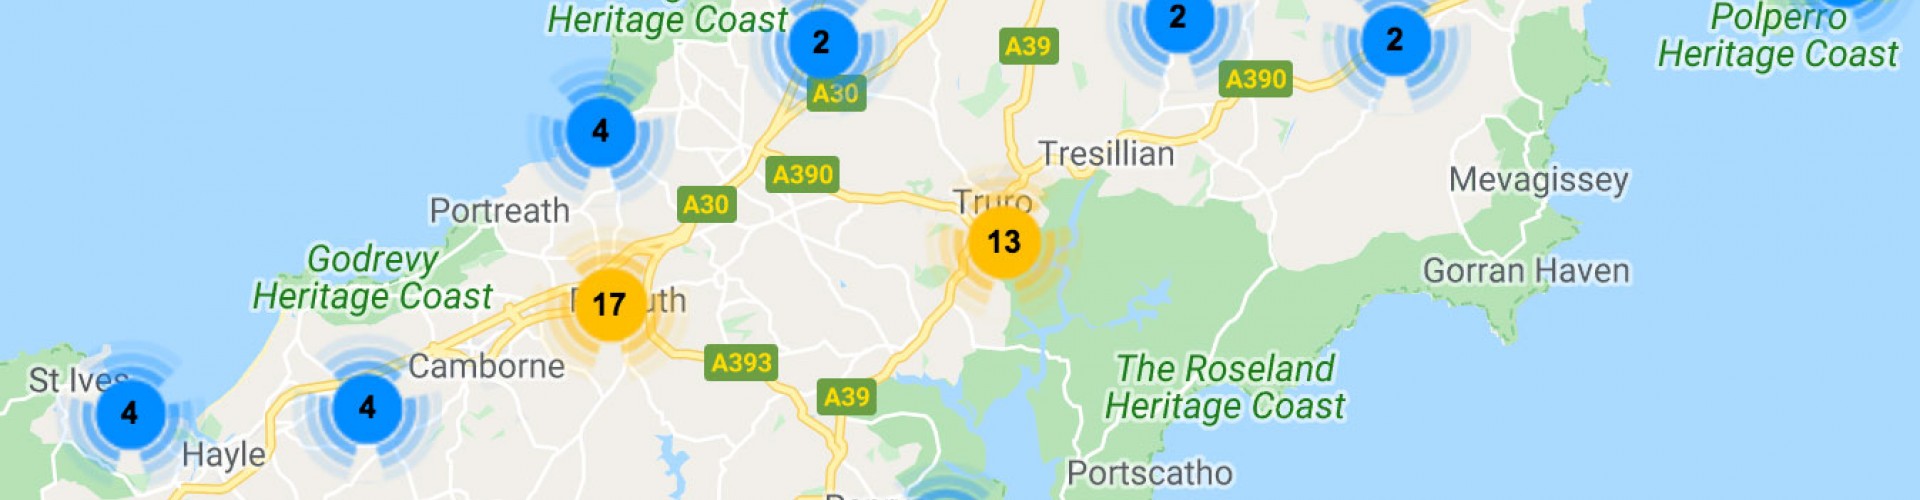 Map Cornwall hotspots|lacuna business